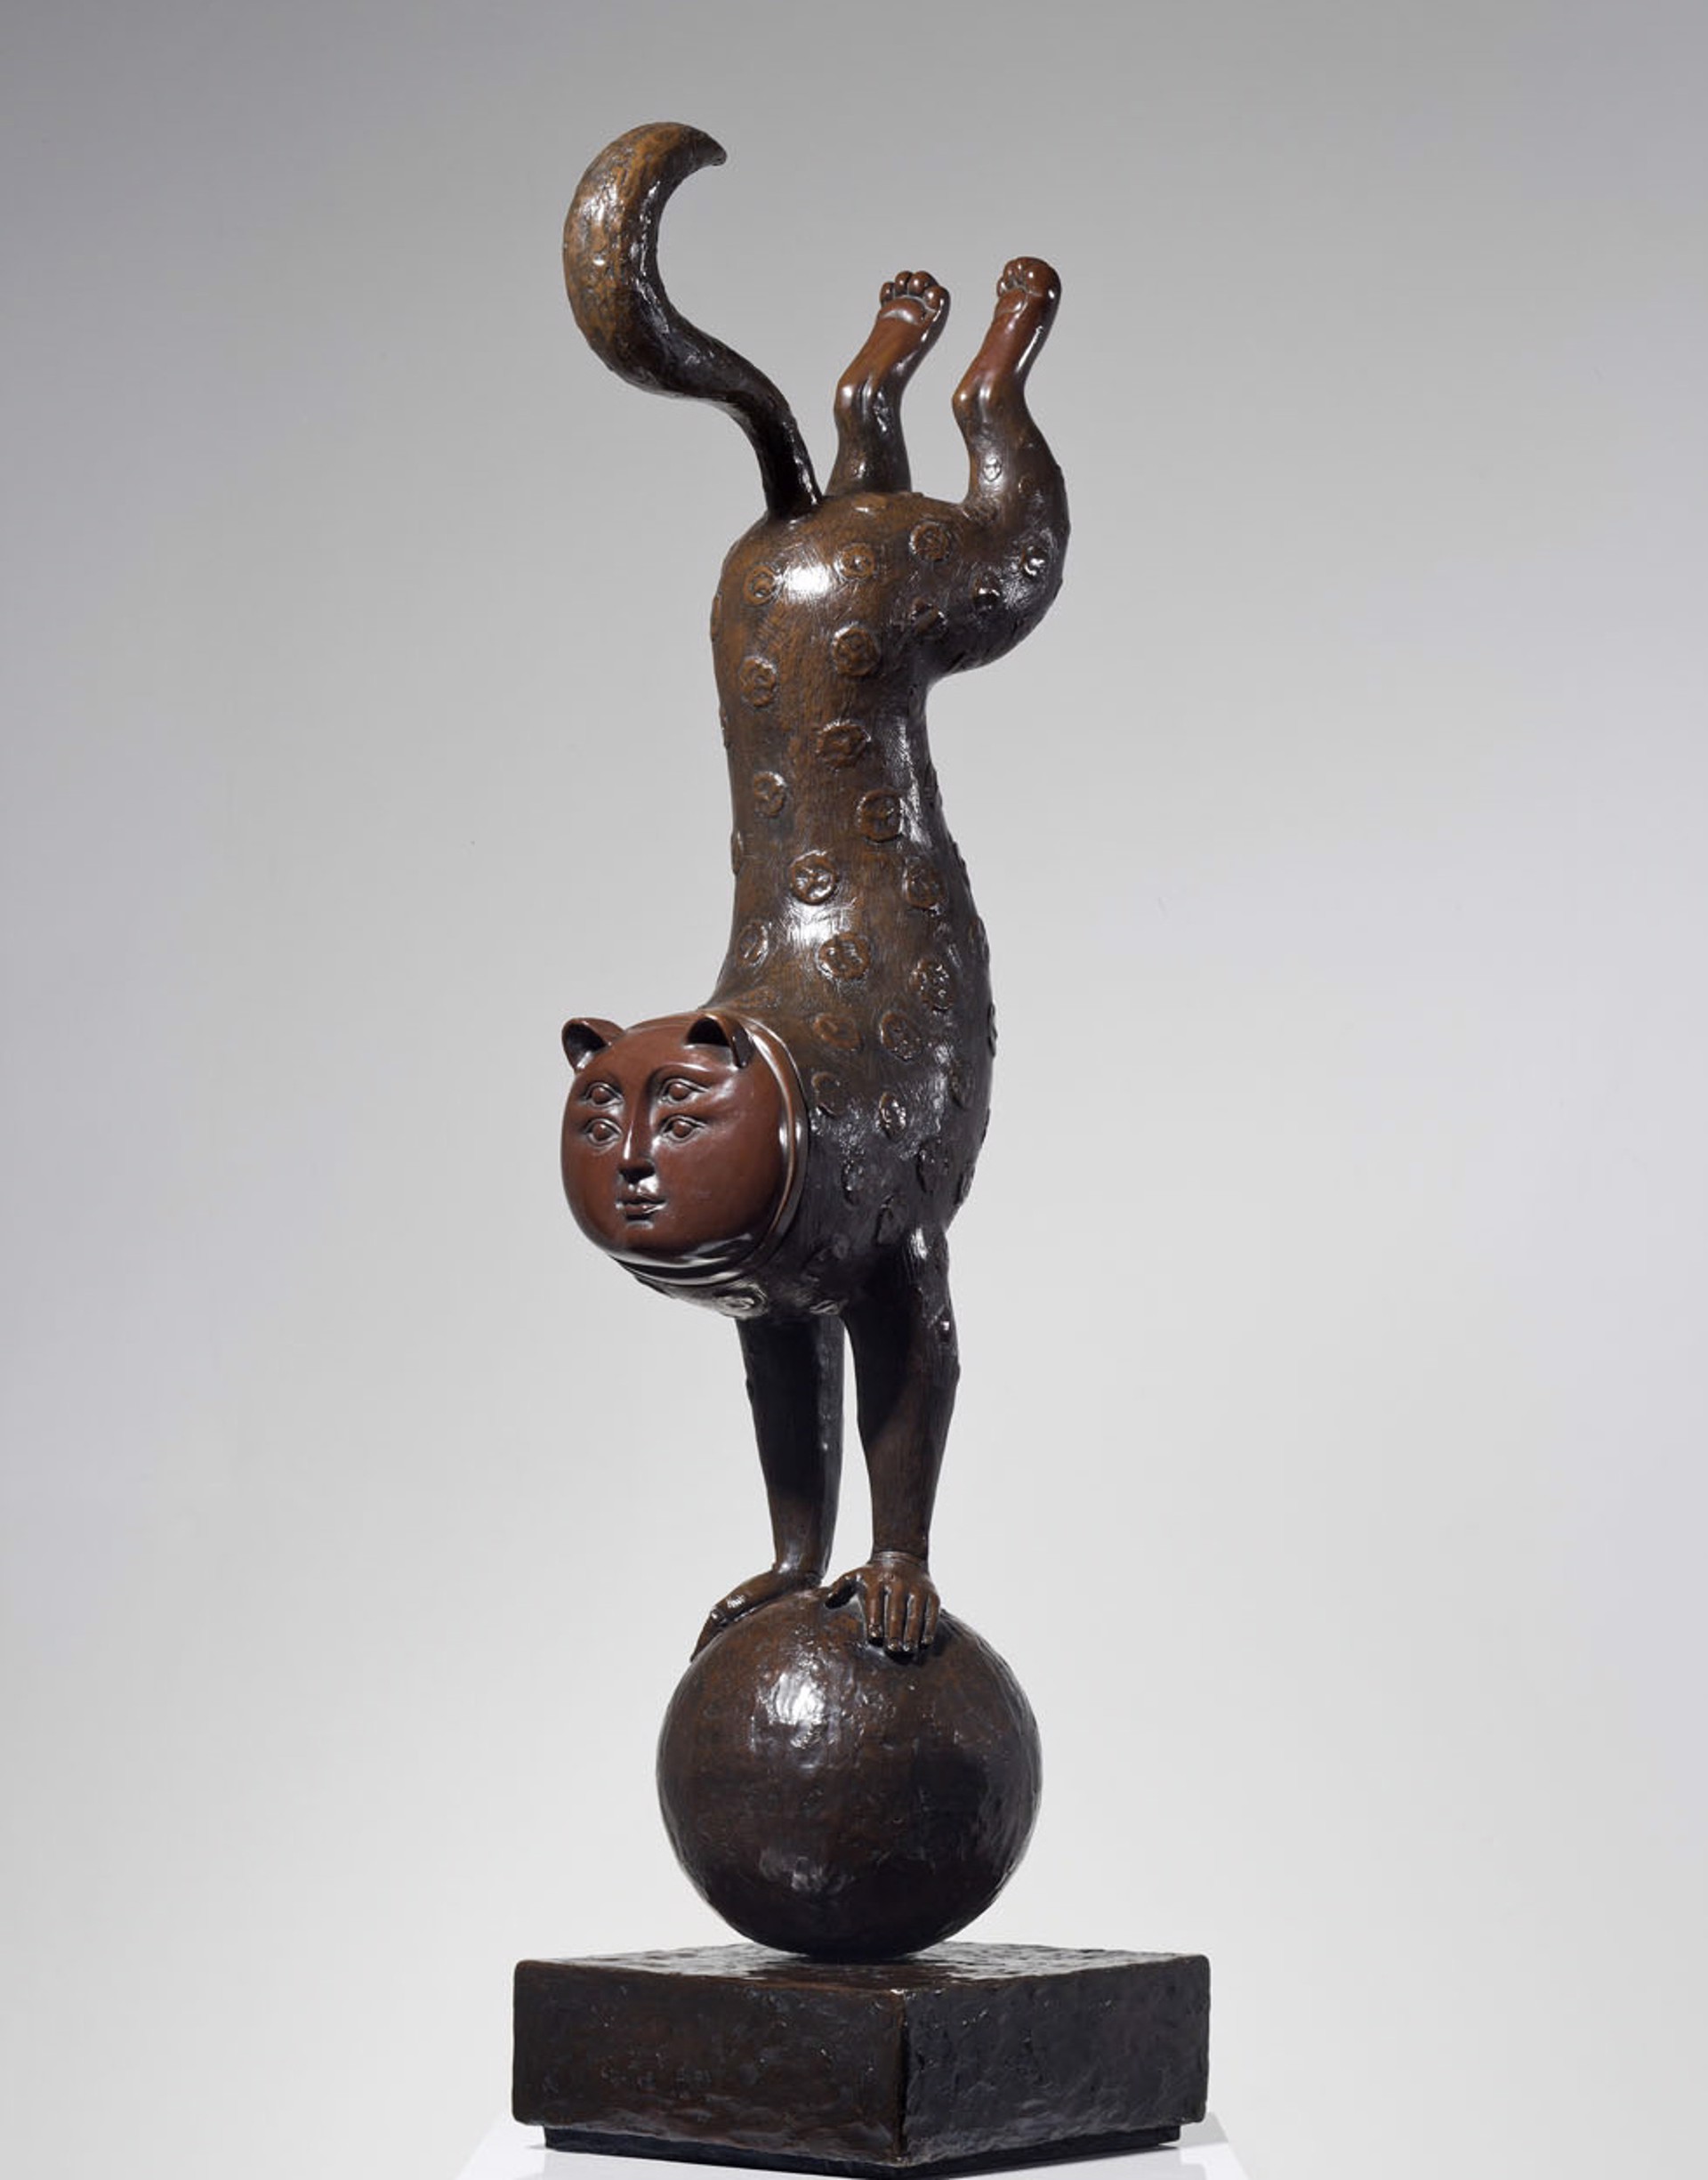 The Equilibrist by Sergio Bustamante (sculptor)